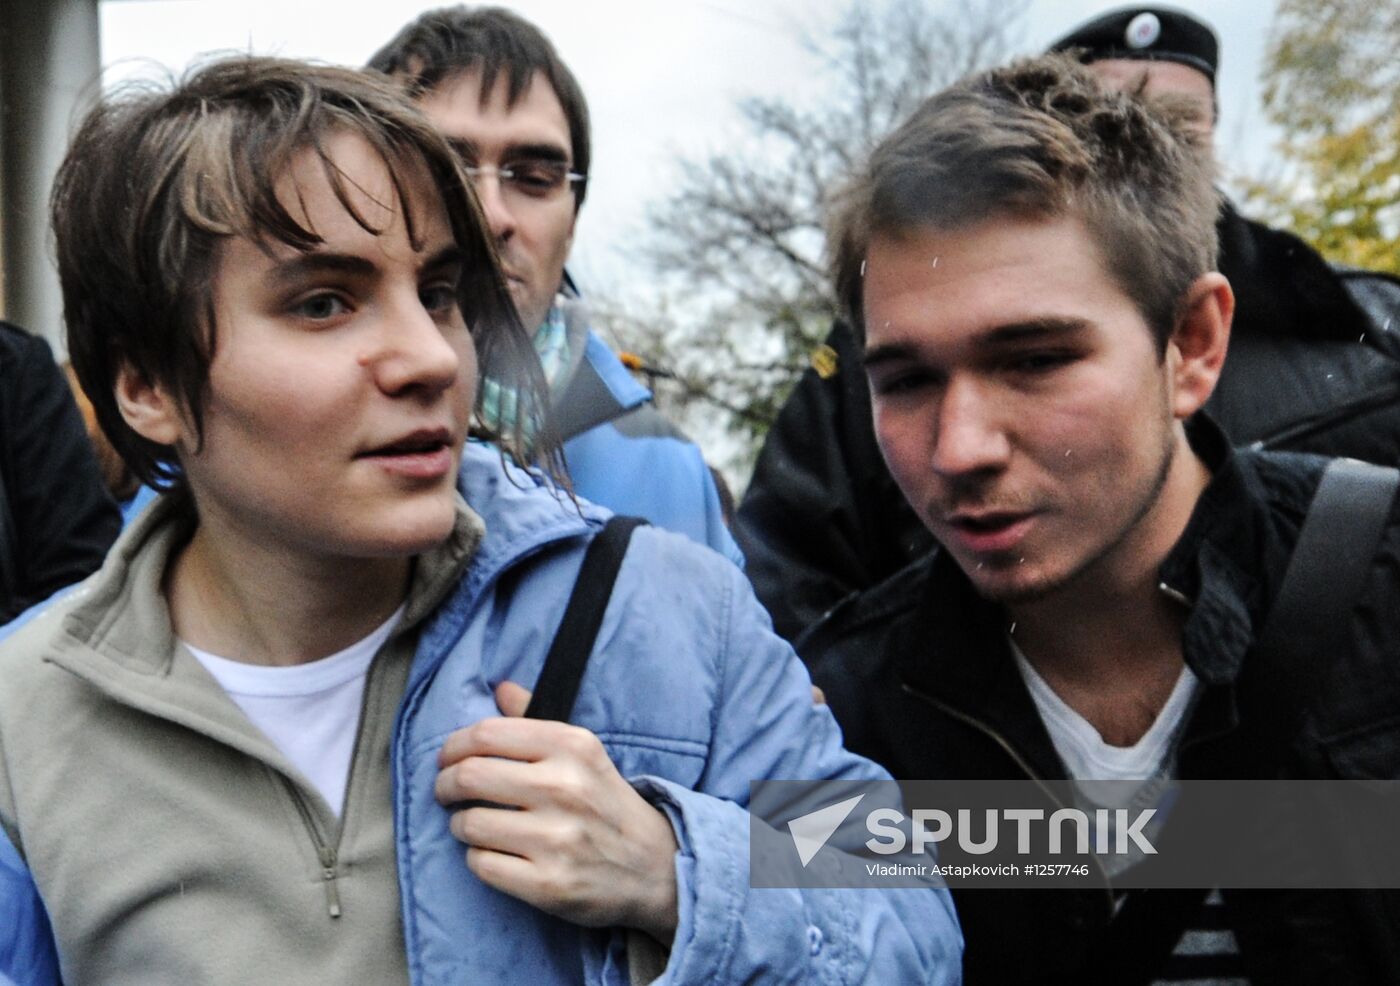 Pussy Riot punk group member Yekaterina Samutsevich freed